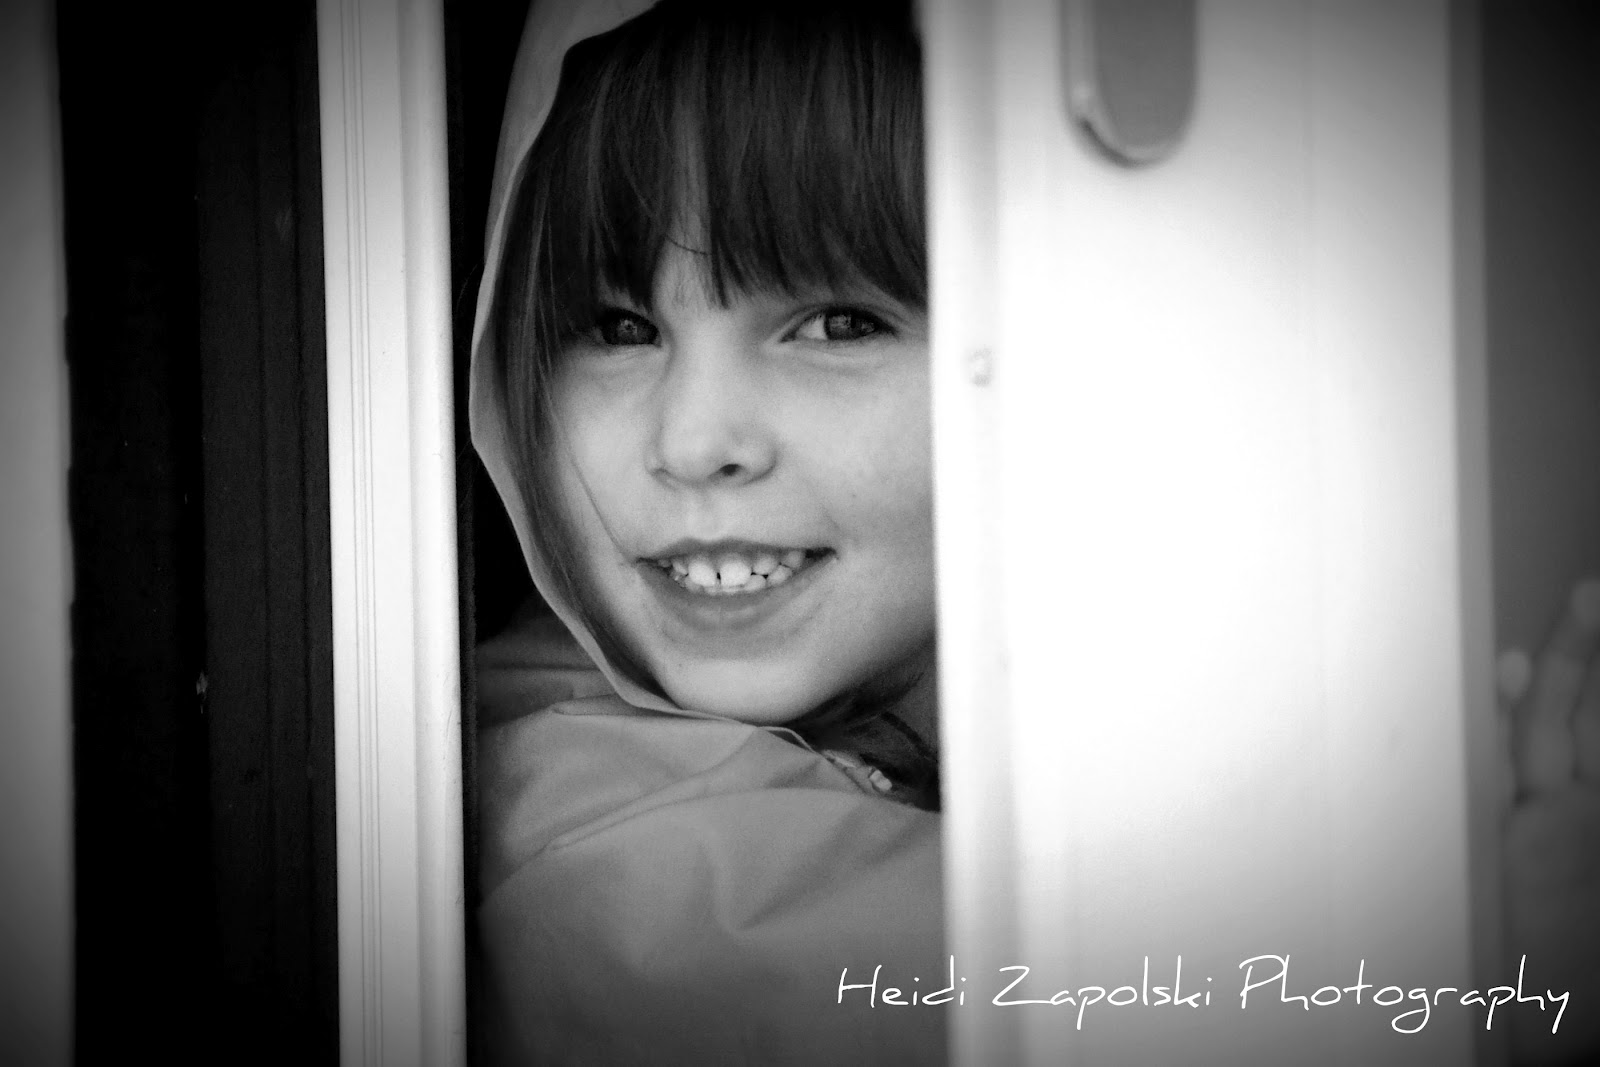 Heidi Zapolski Photography